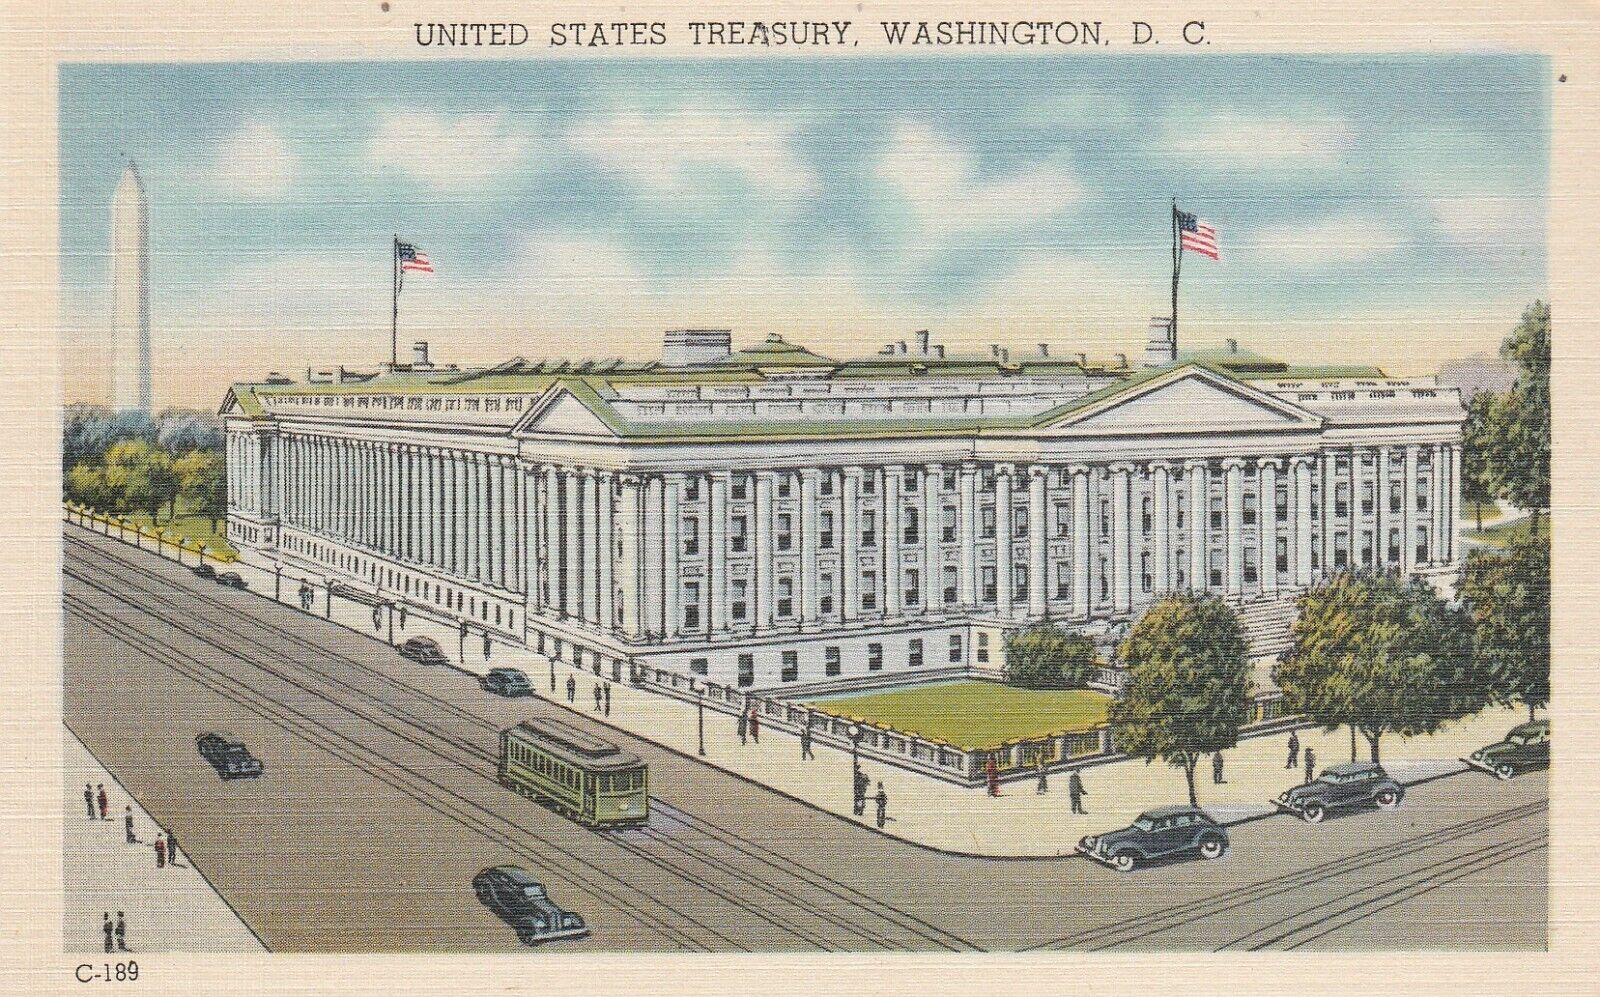 Washington, D.C., United States Treasury, District of Columbia